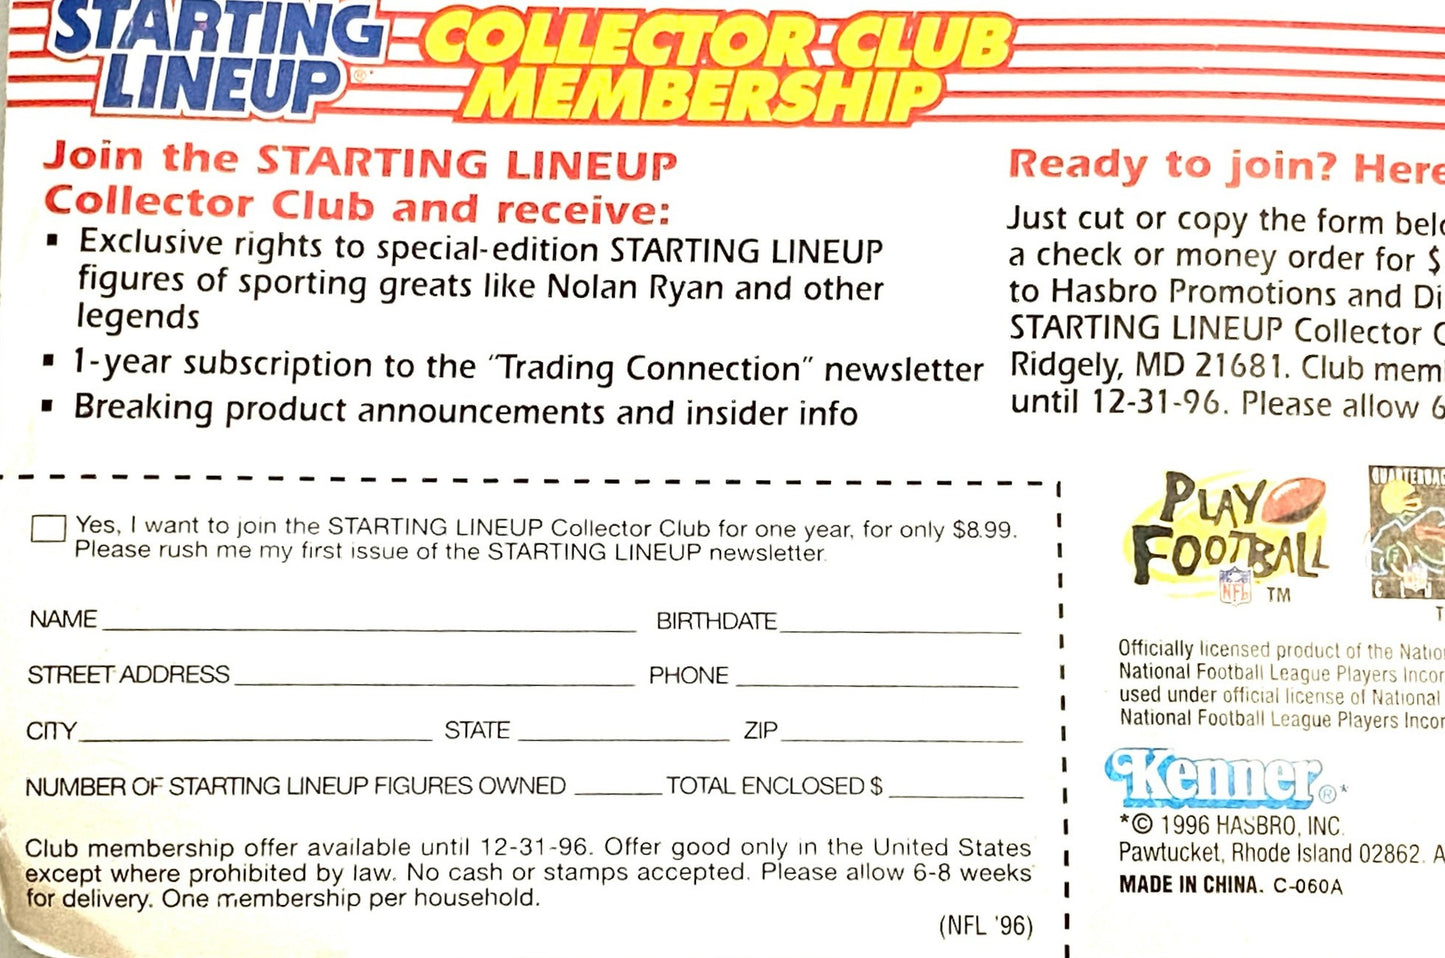 Steve McNair 1996 NFL Houston Oilers Starting Lineup Figurine NOS by Kenner